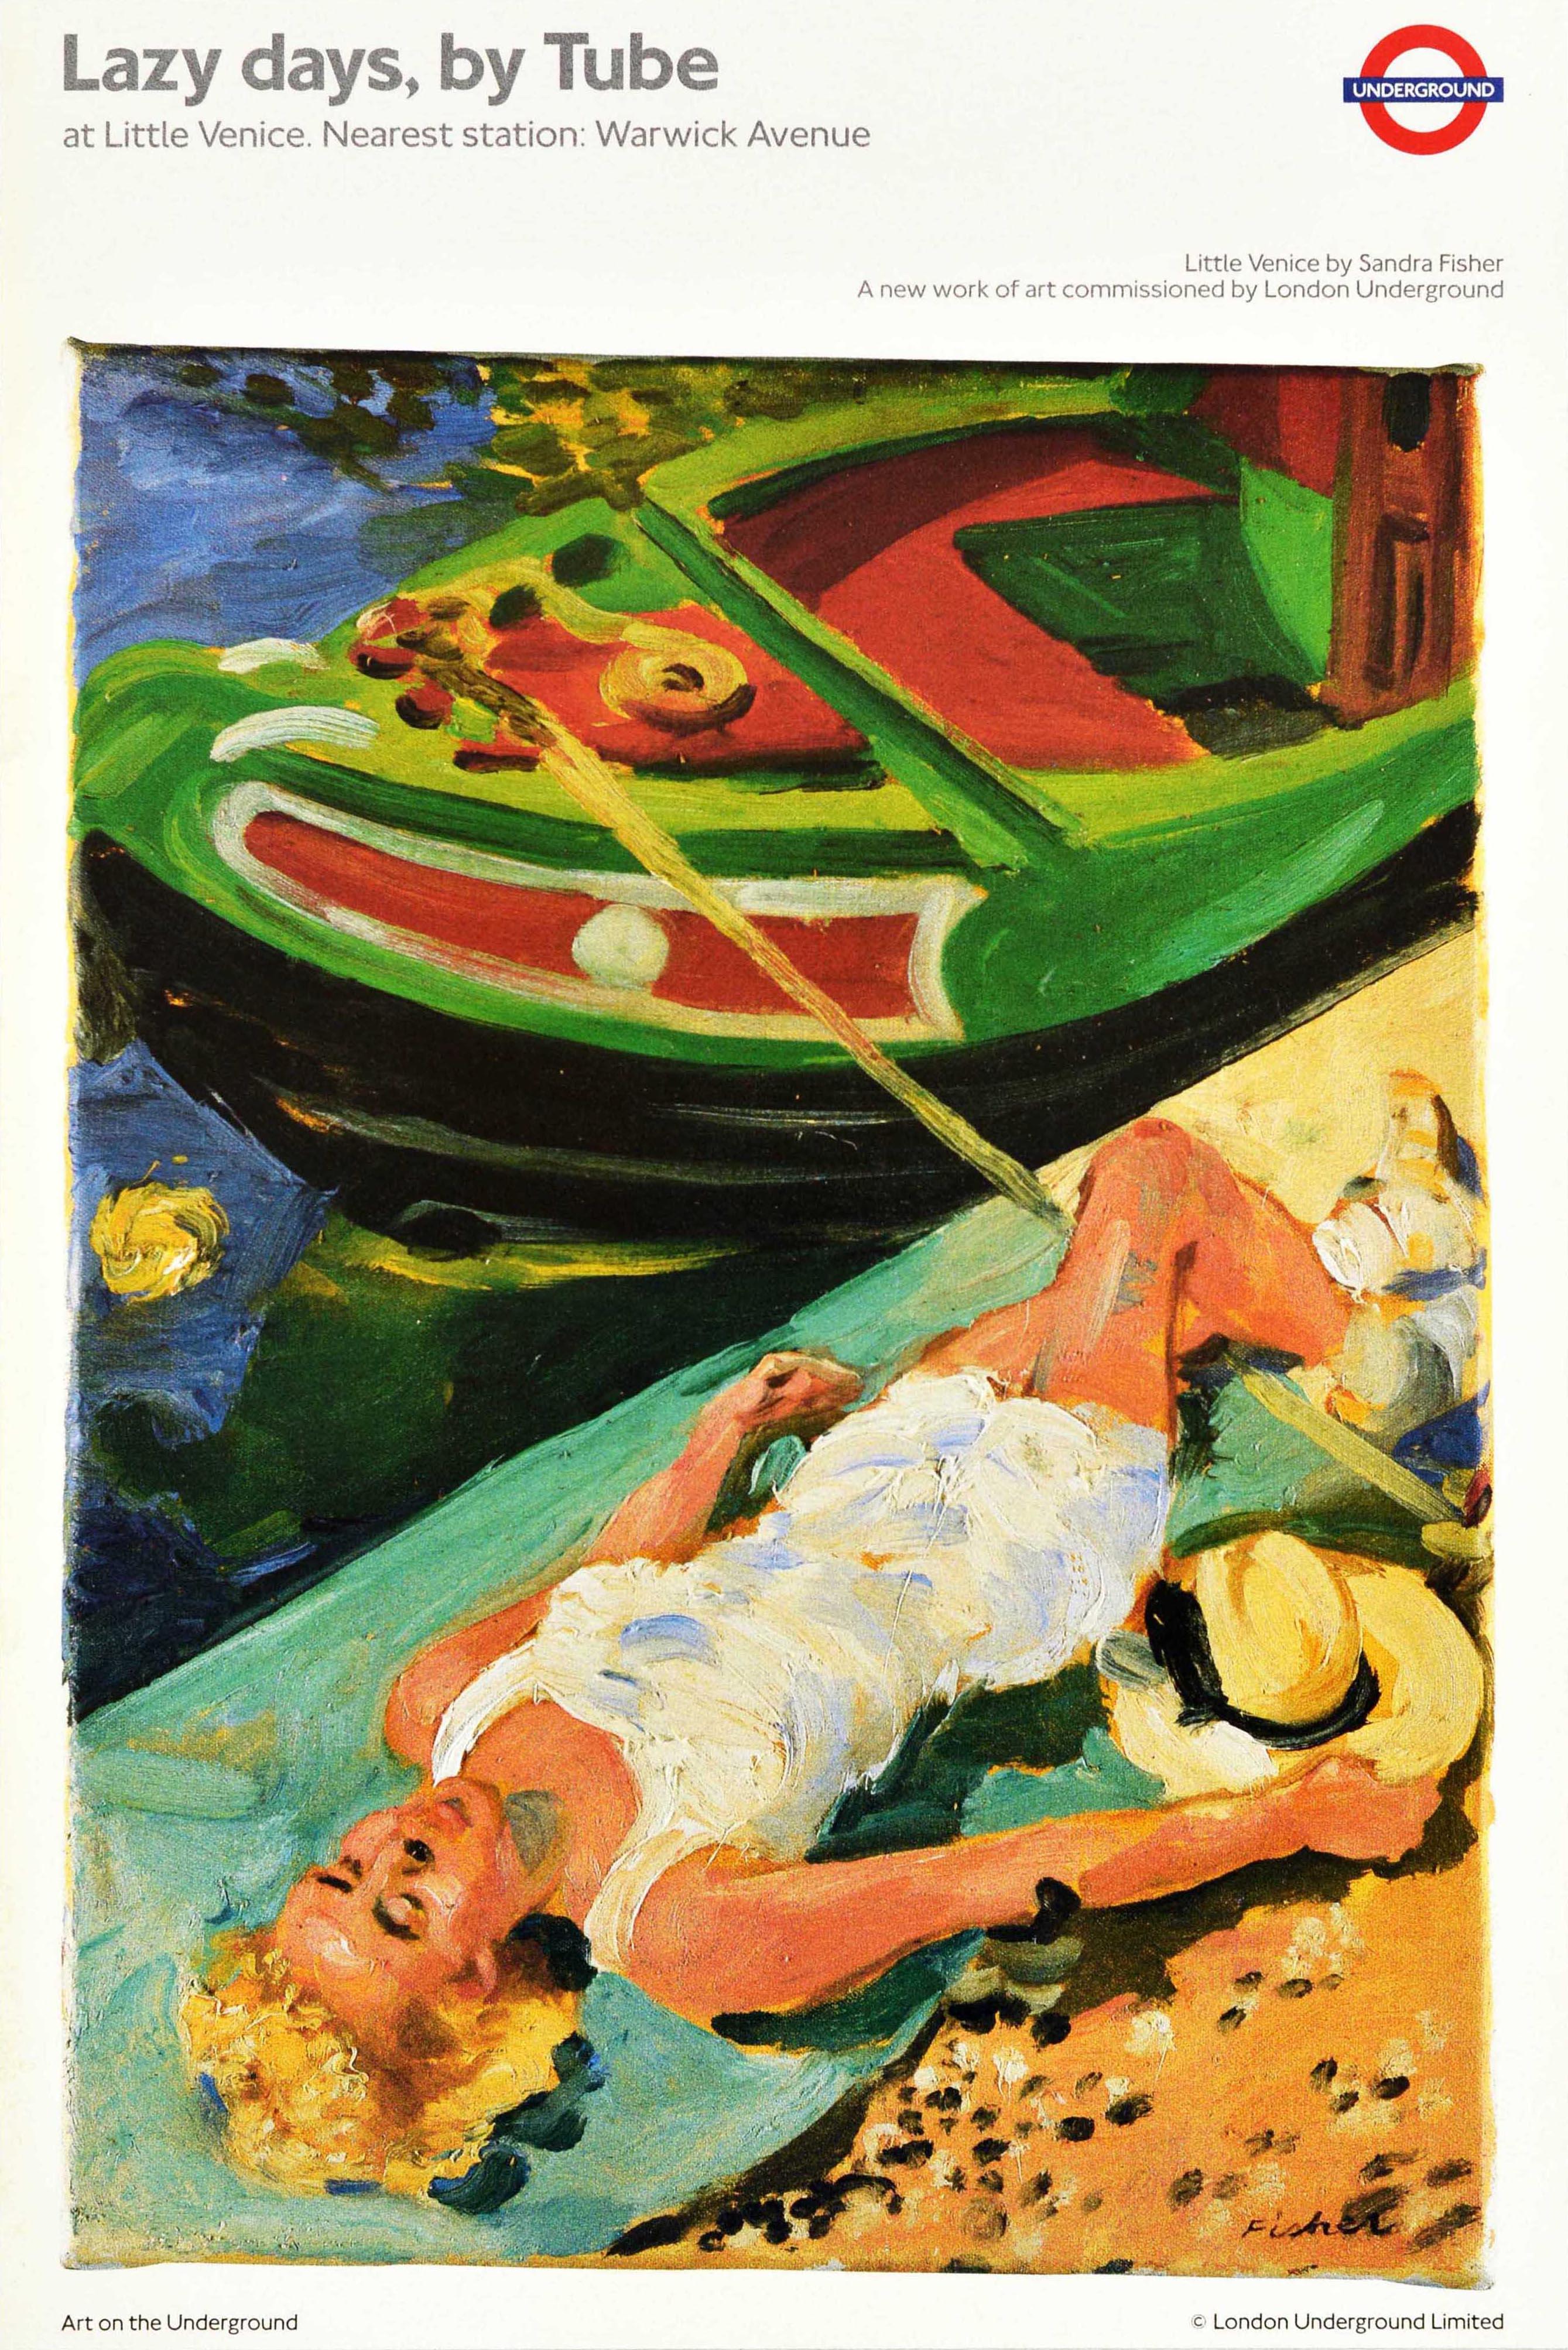 Unknown Print – Original-Vintage-Poster, Londoner U-Bahn-Poster LT, „Lazy Days“ von Tube Little Venice